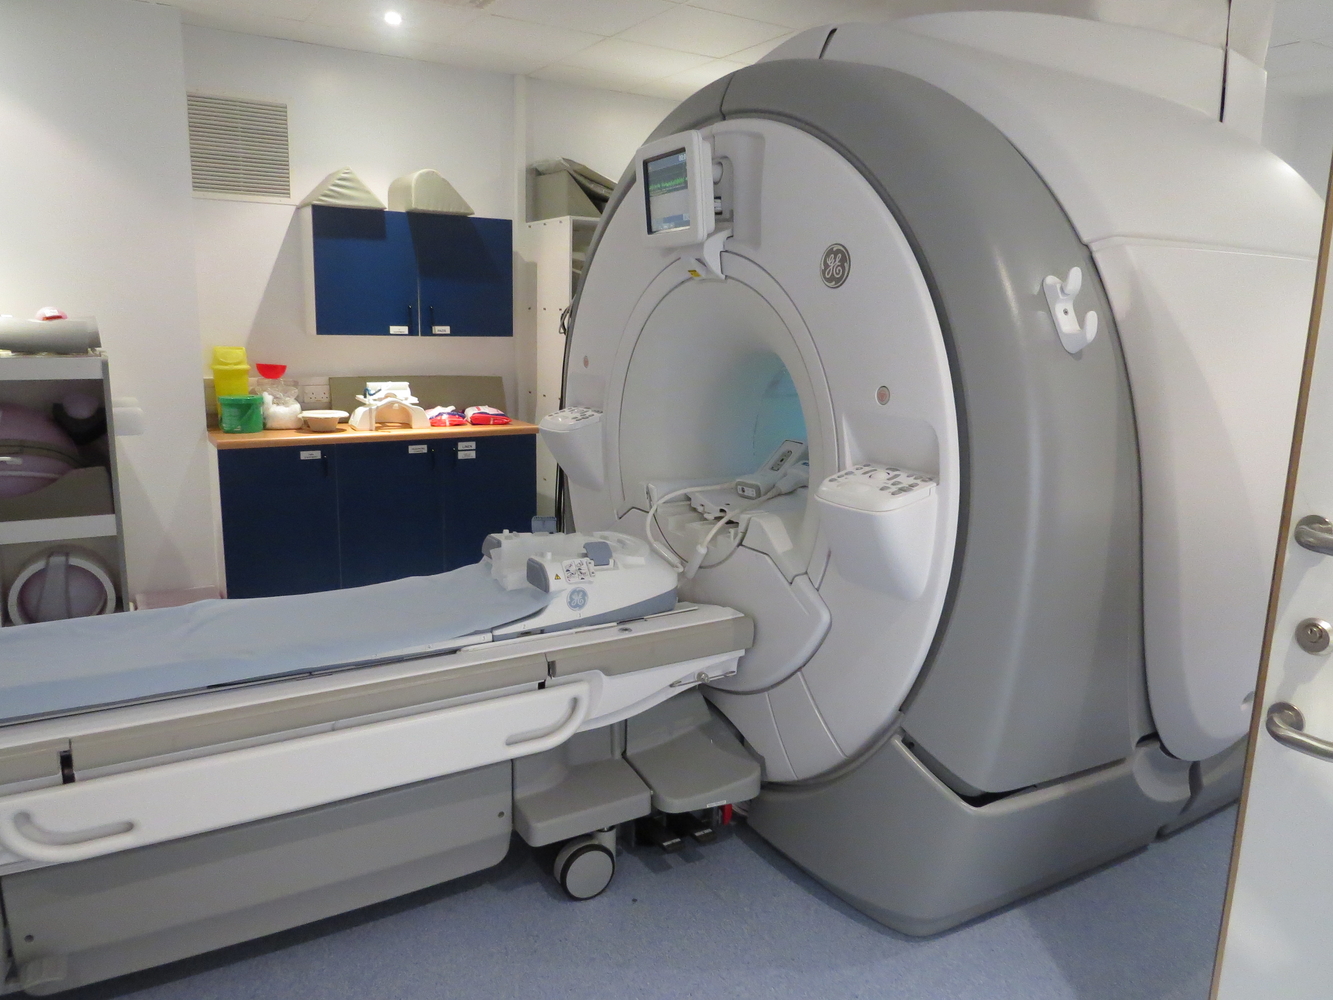 A photo of an MRI scanner